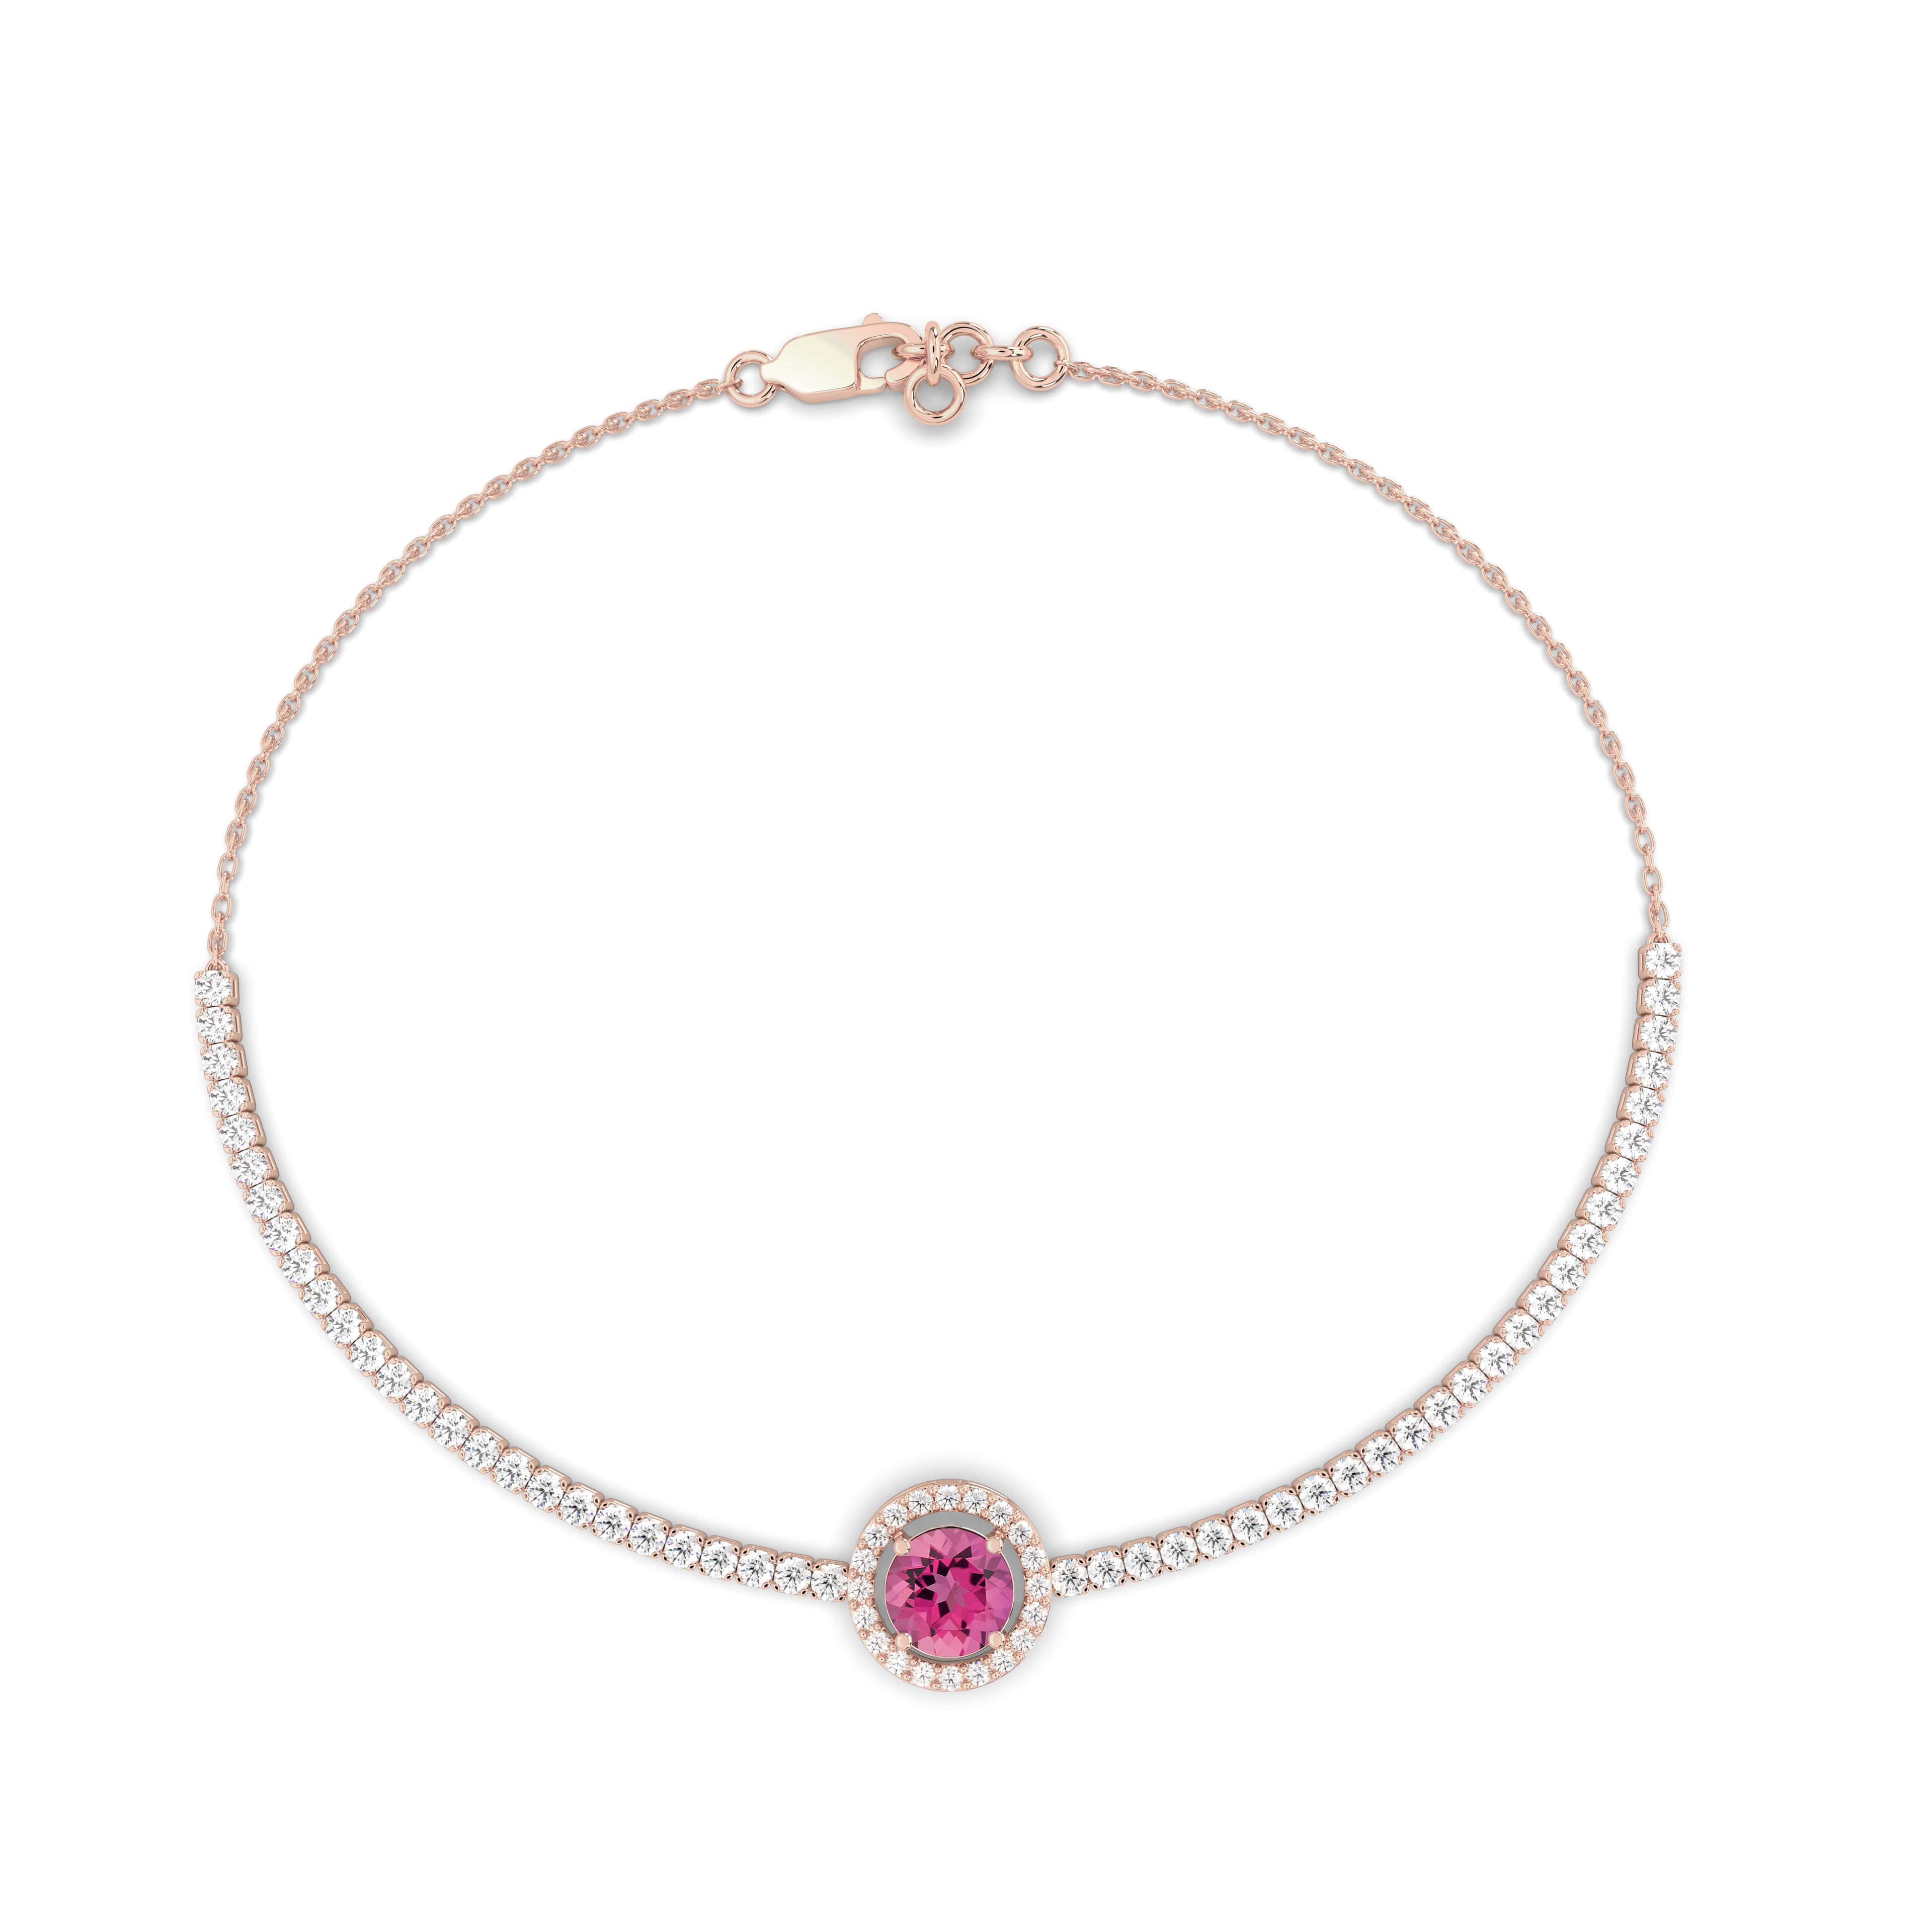 Defining Bracelet- Happiness Bracelet with Pink Tourmaline Gemstones